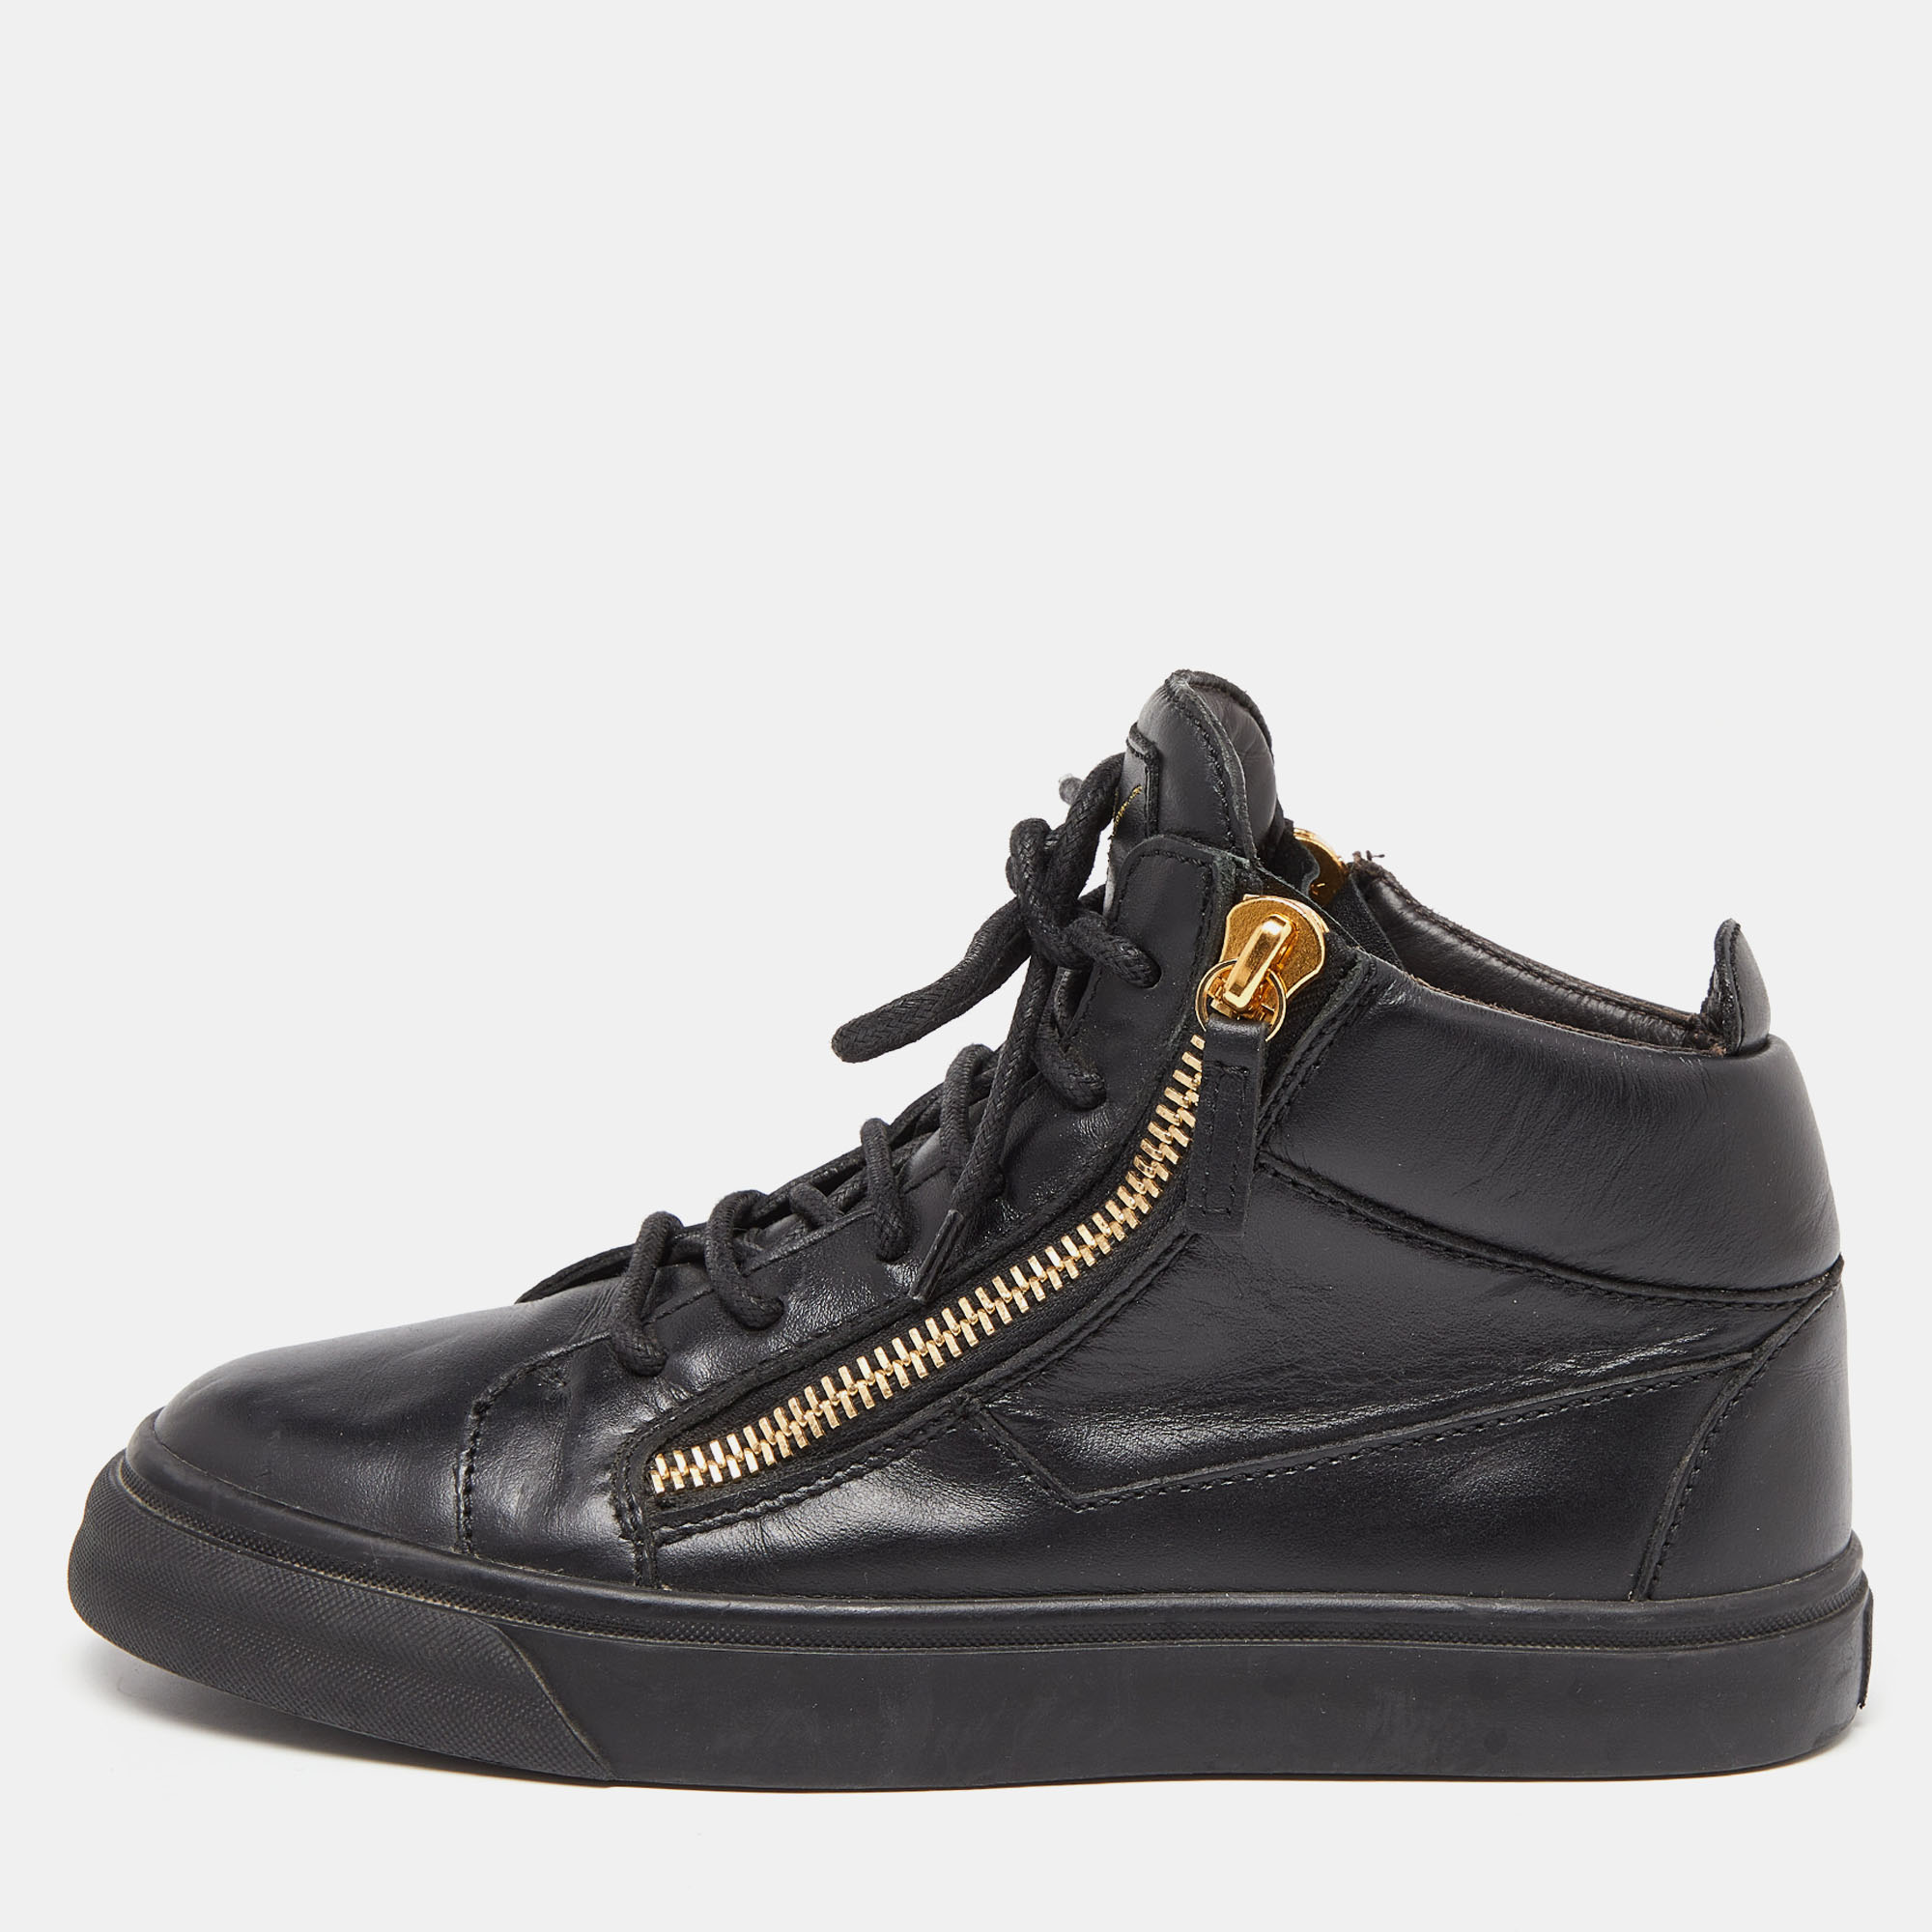 Giuseppe Zanotti Black Leather London High-Top Sneakers Size 37